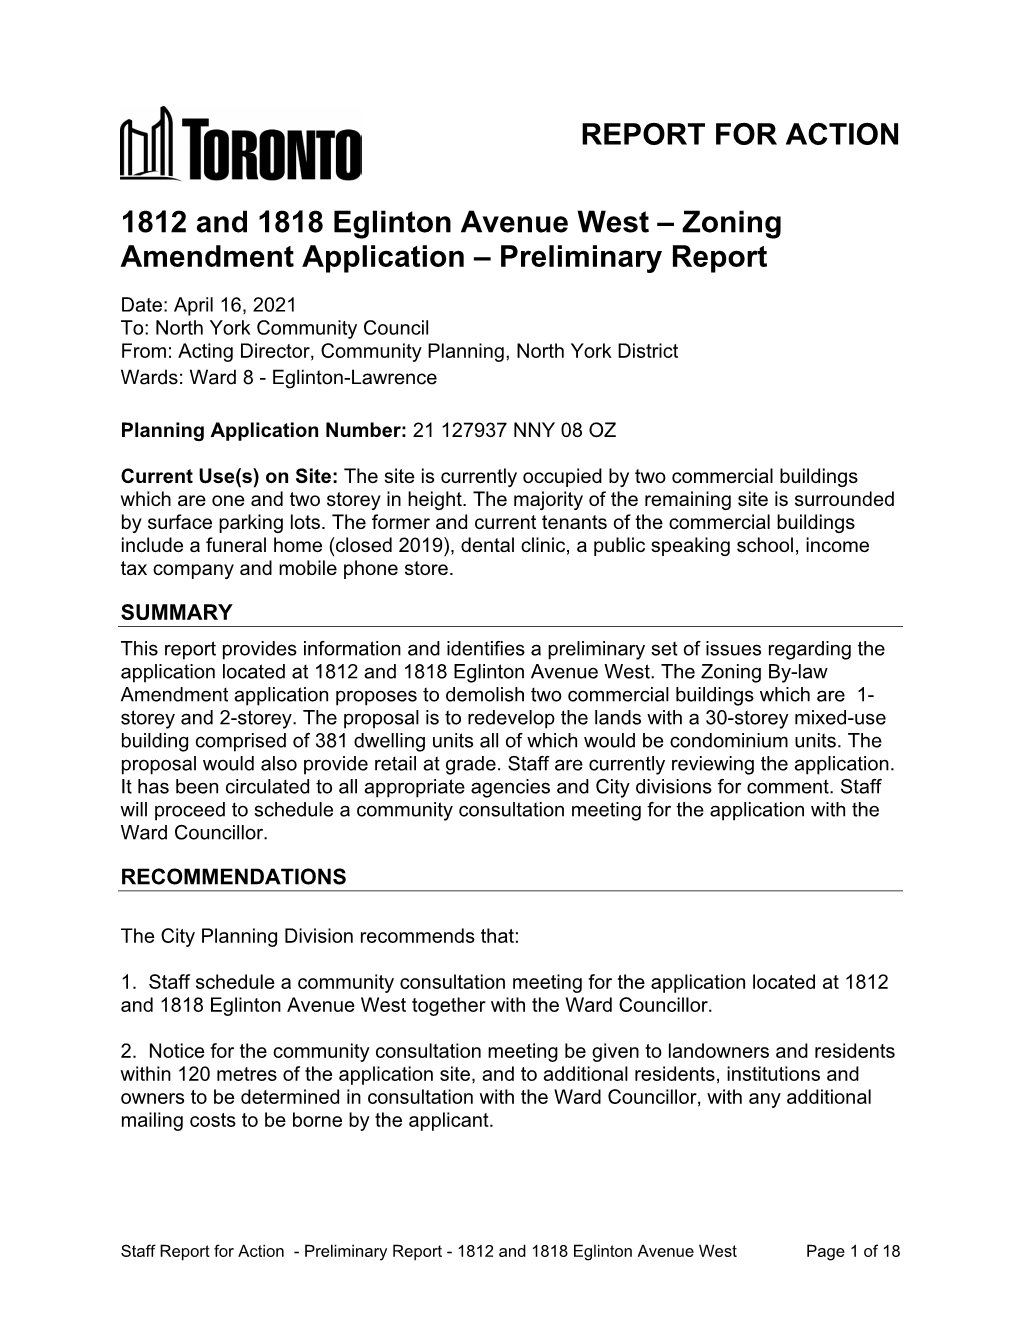 1812 and 1818 Eglinton Avenue West – Zoning Amendment Application – Preliminary Report